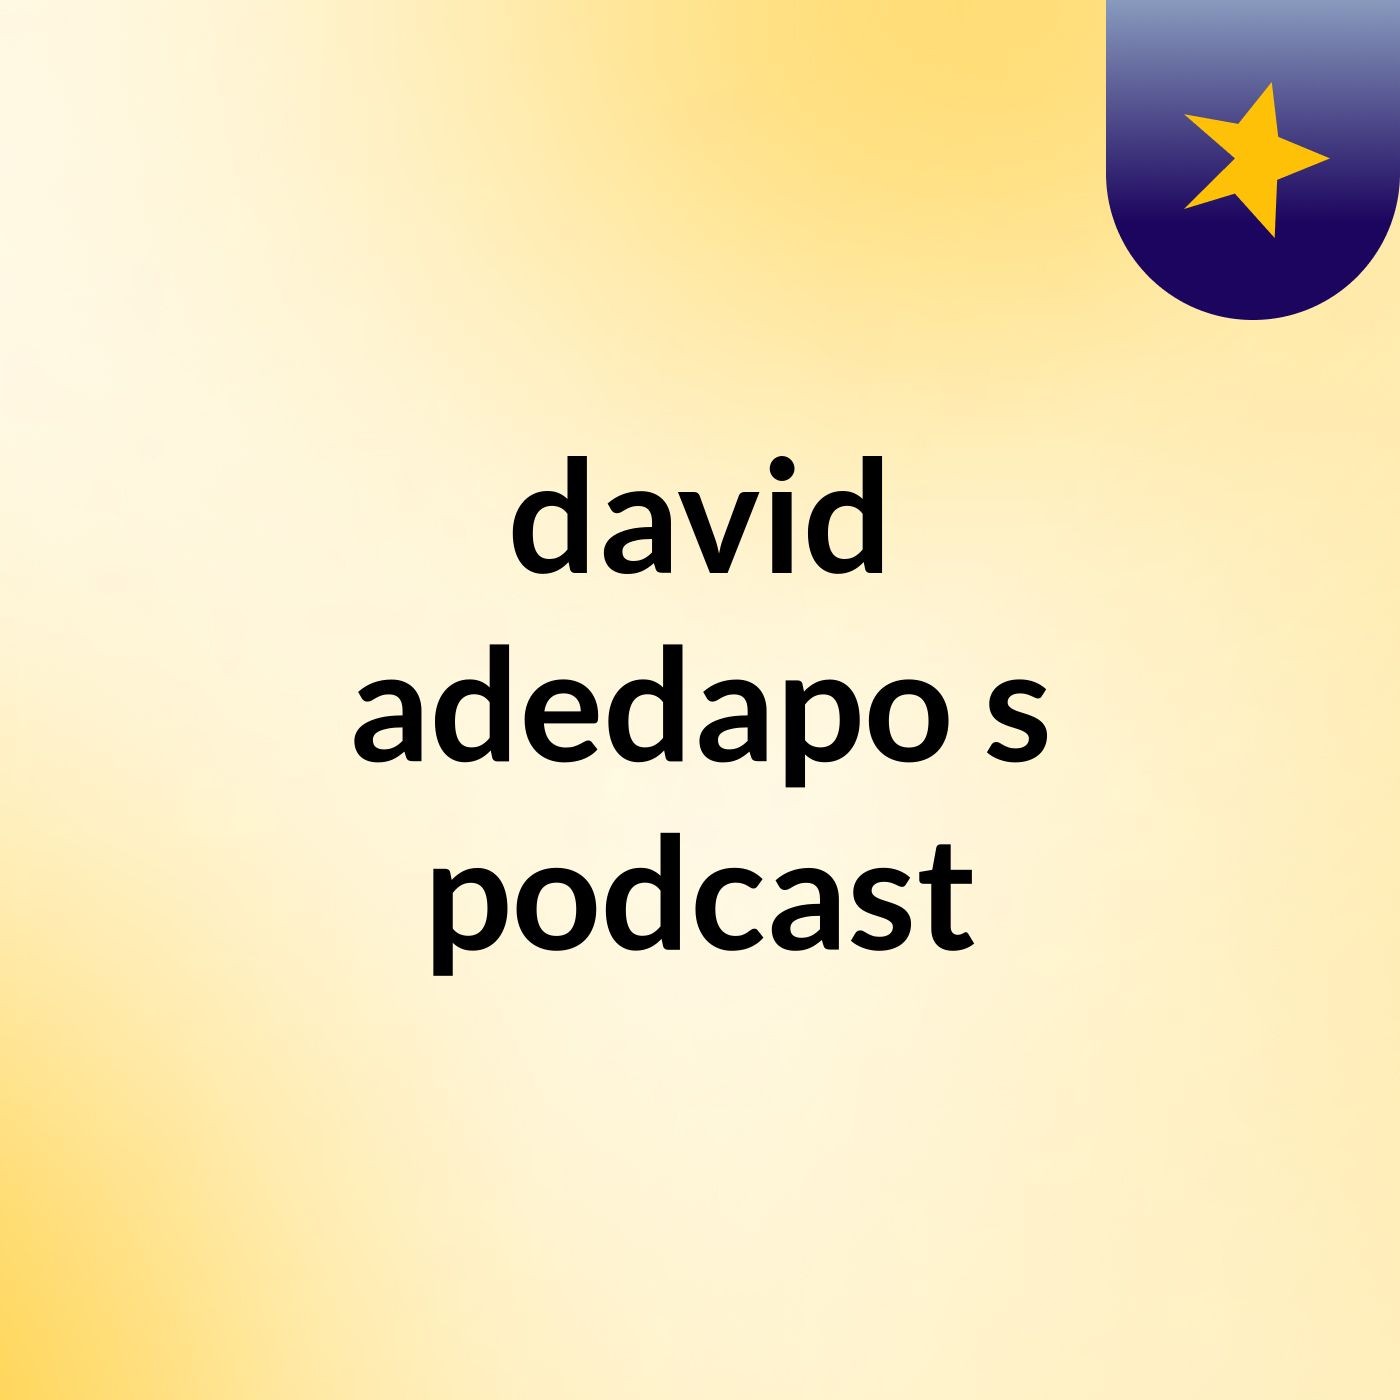 david adedapo's podcast